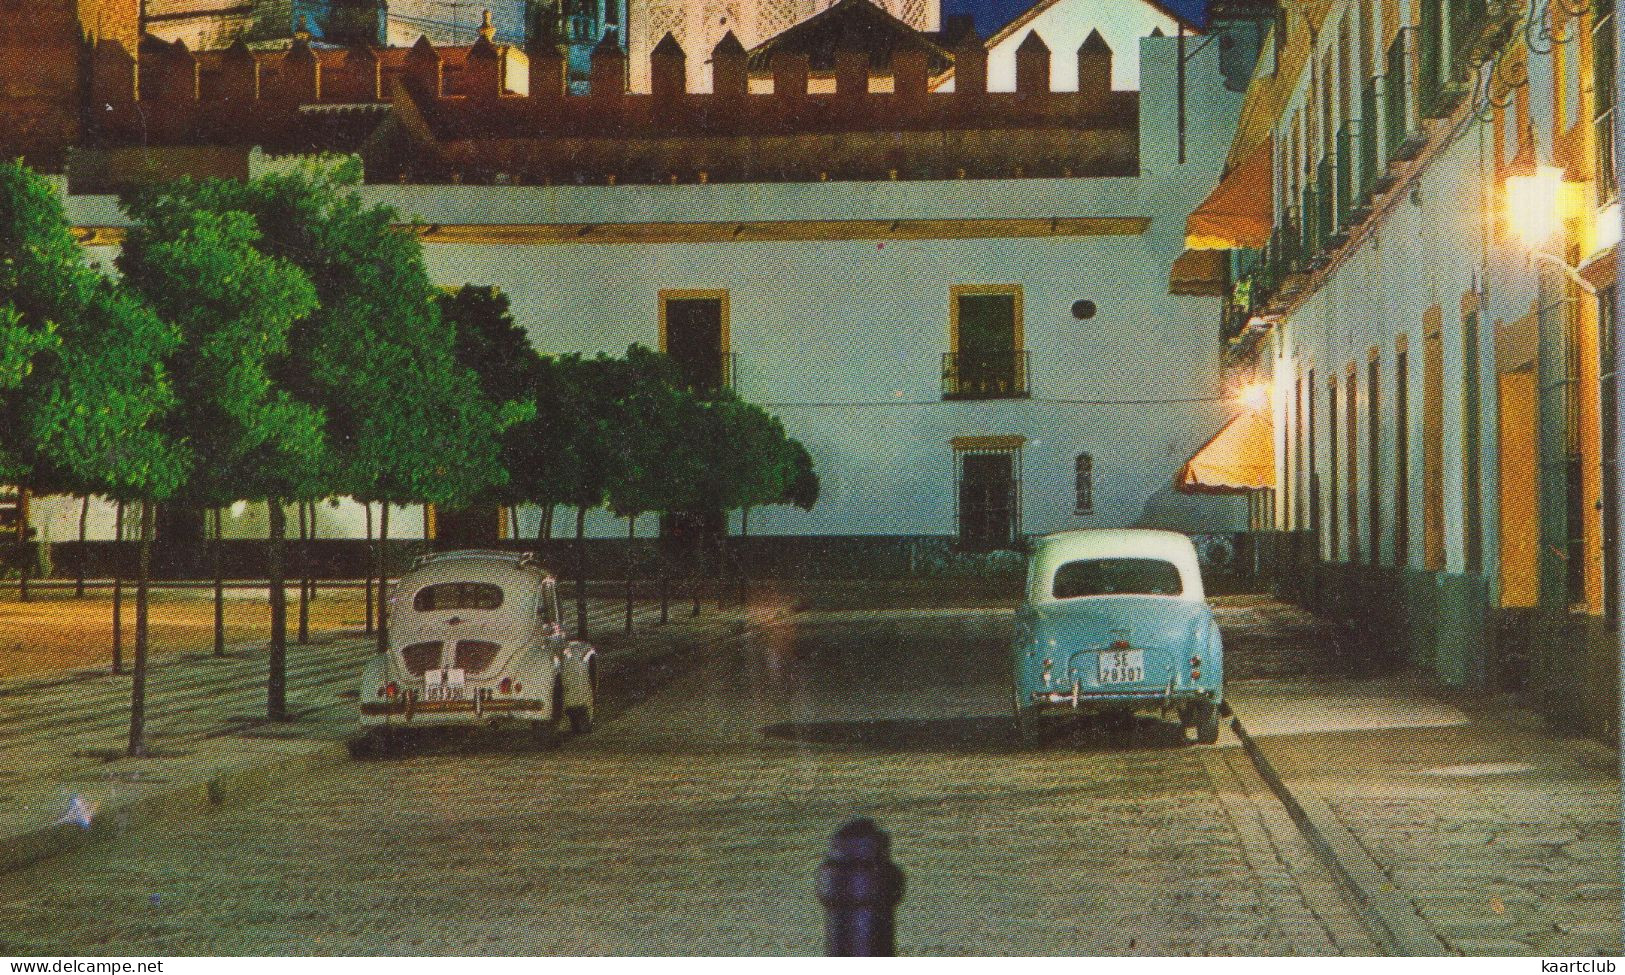 Sevilla: RENAULT 4CV, AUSTIN A40 CAMBRIDGE '56 - La Giralda - (Spain) - Passenger Cars